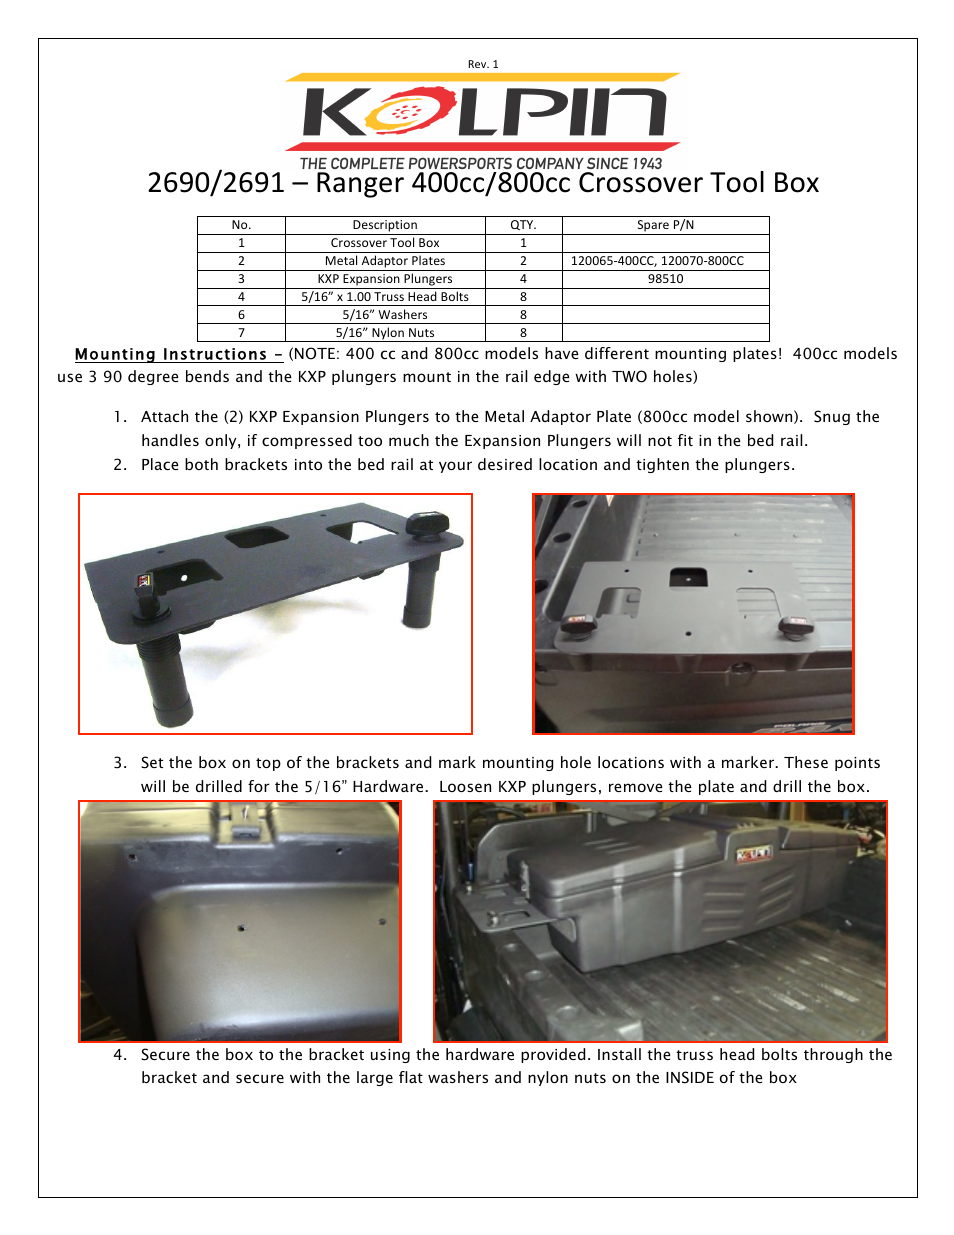 2691 – Ranger 800cc Crossover Tool Box